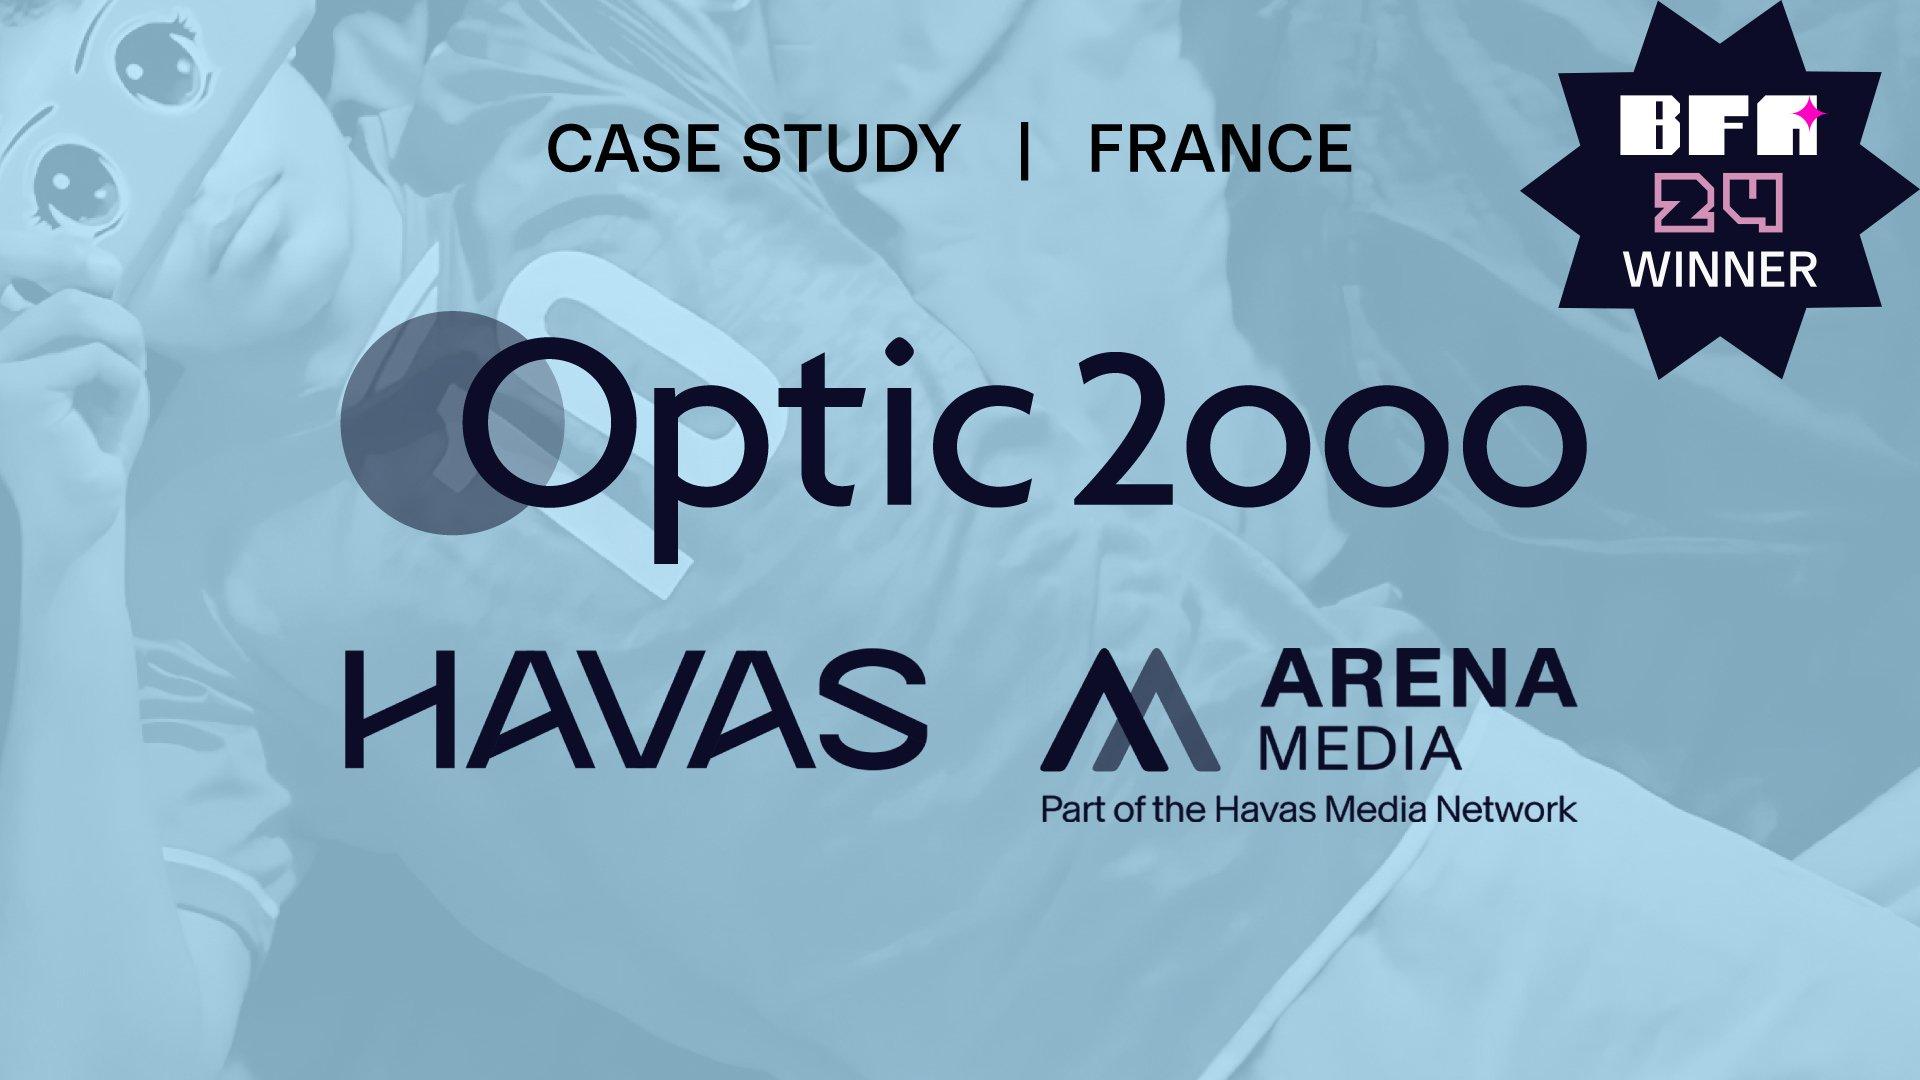 image with Optic2000, Havas and Arena Media logos